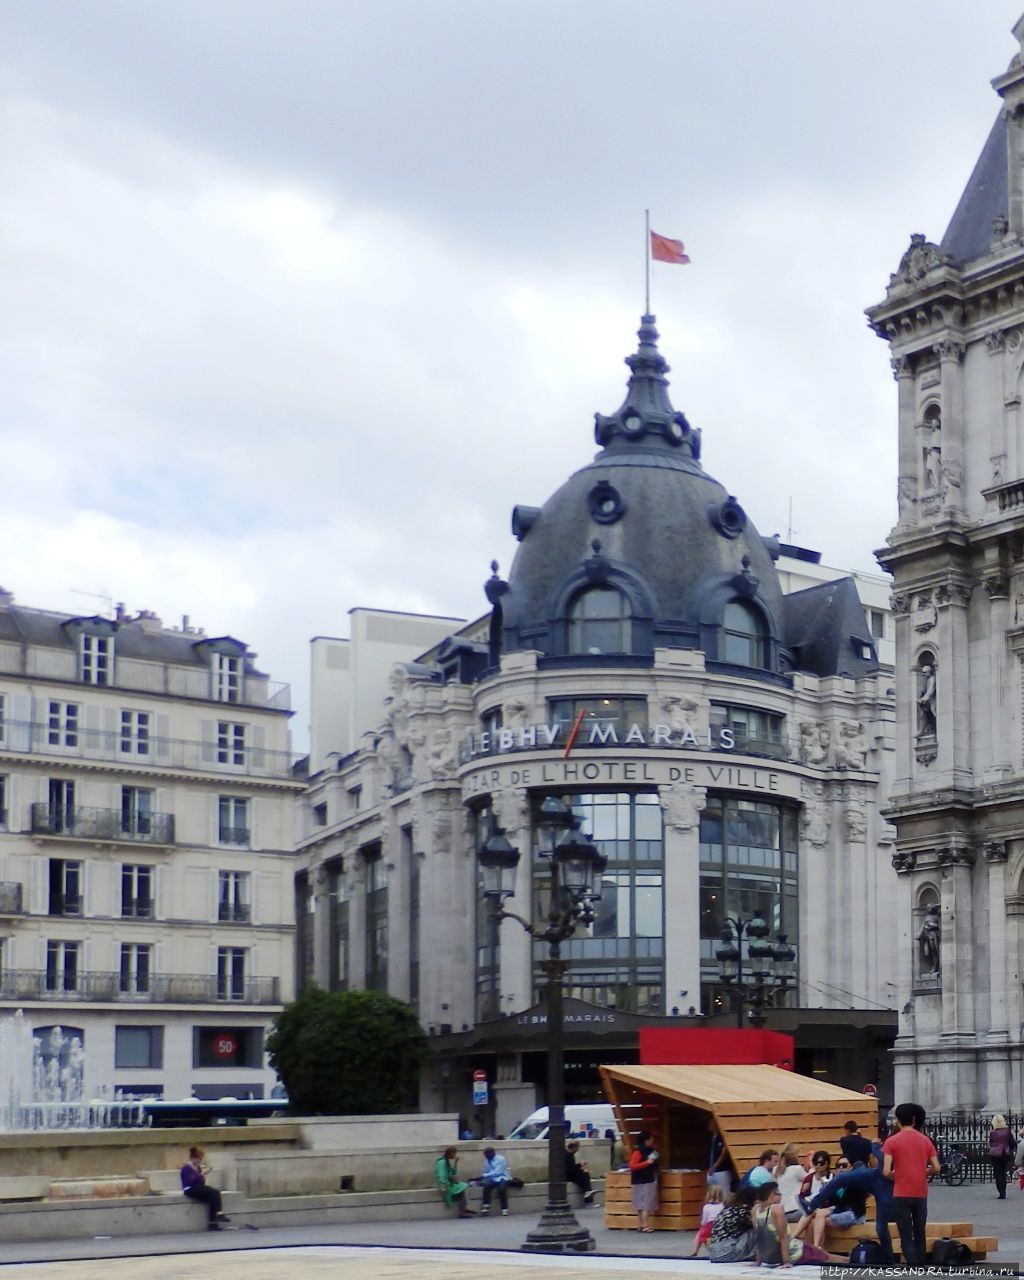 Базар де ль'Отель де Виль Париж, Франция